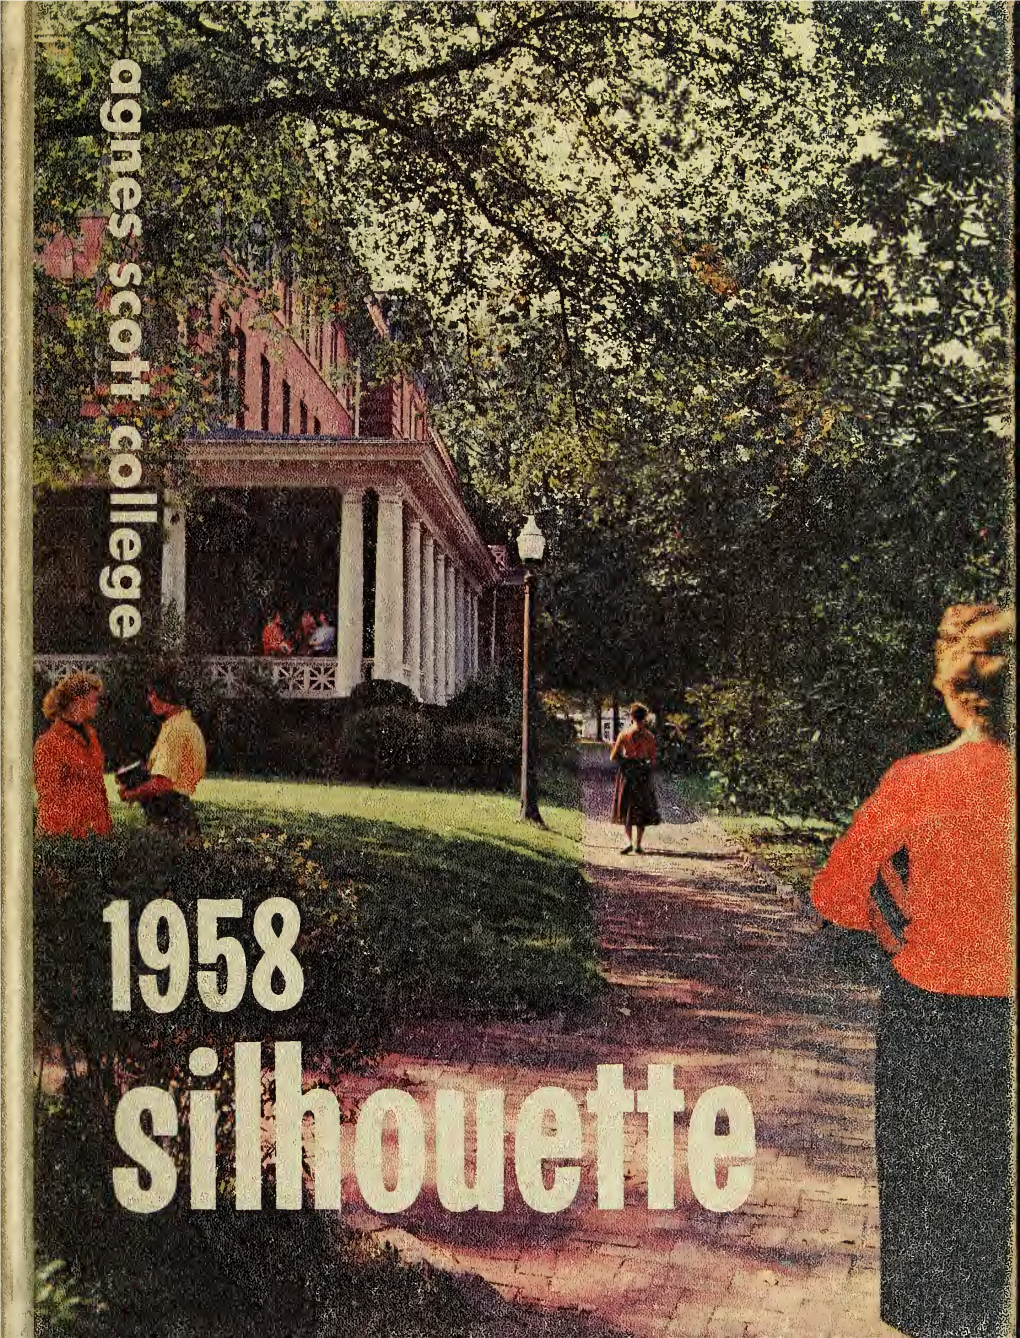 Silhouette (1958)